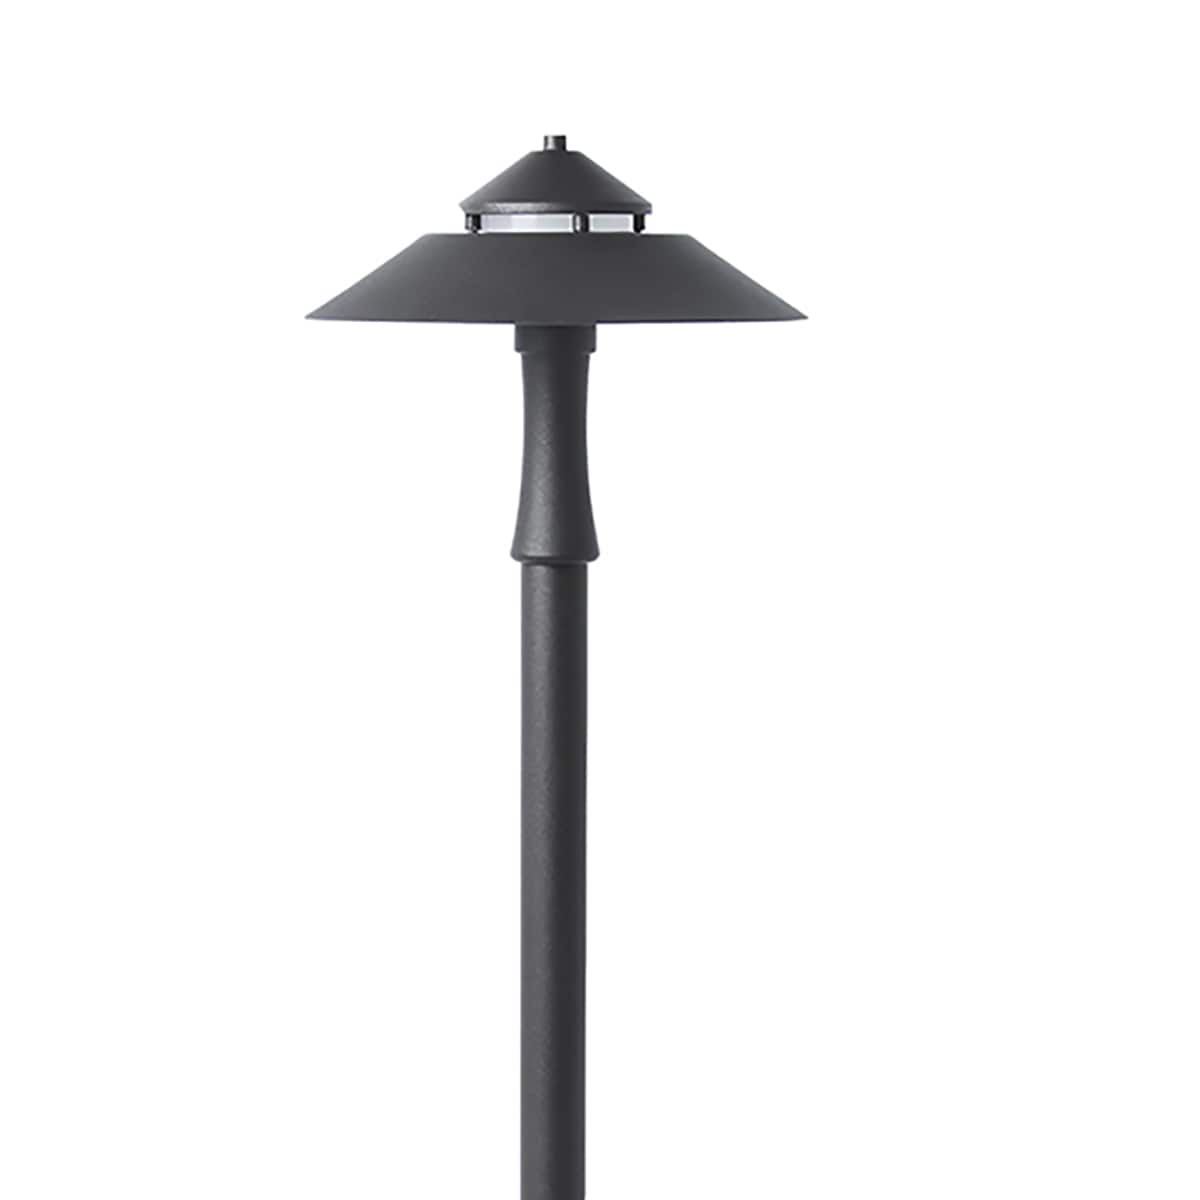 Tall 68 High Garden Light for Low Voltage Landscape Light Systems - #78D81